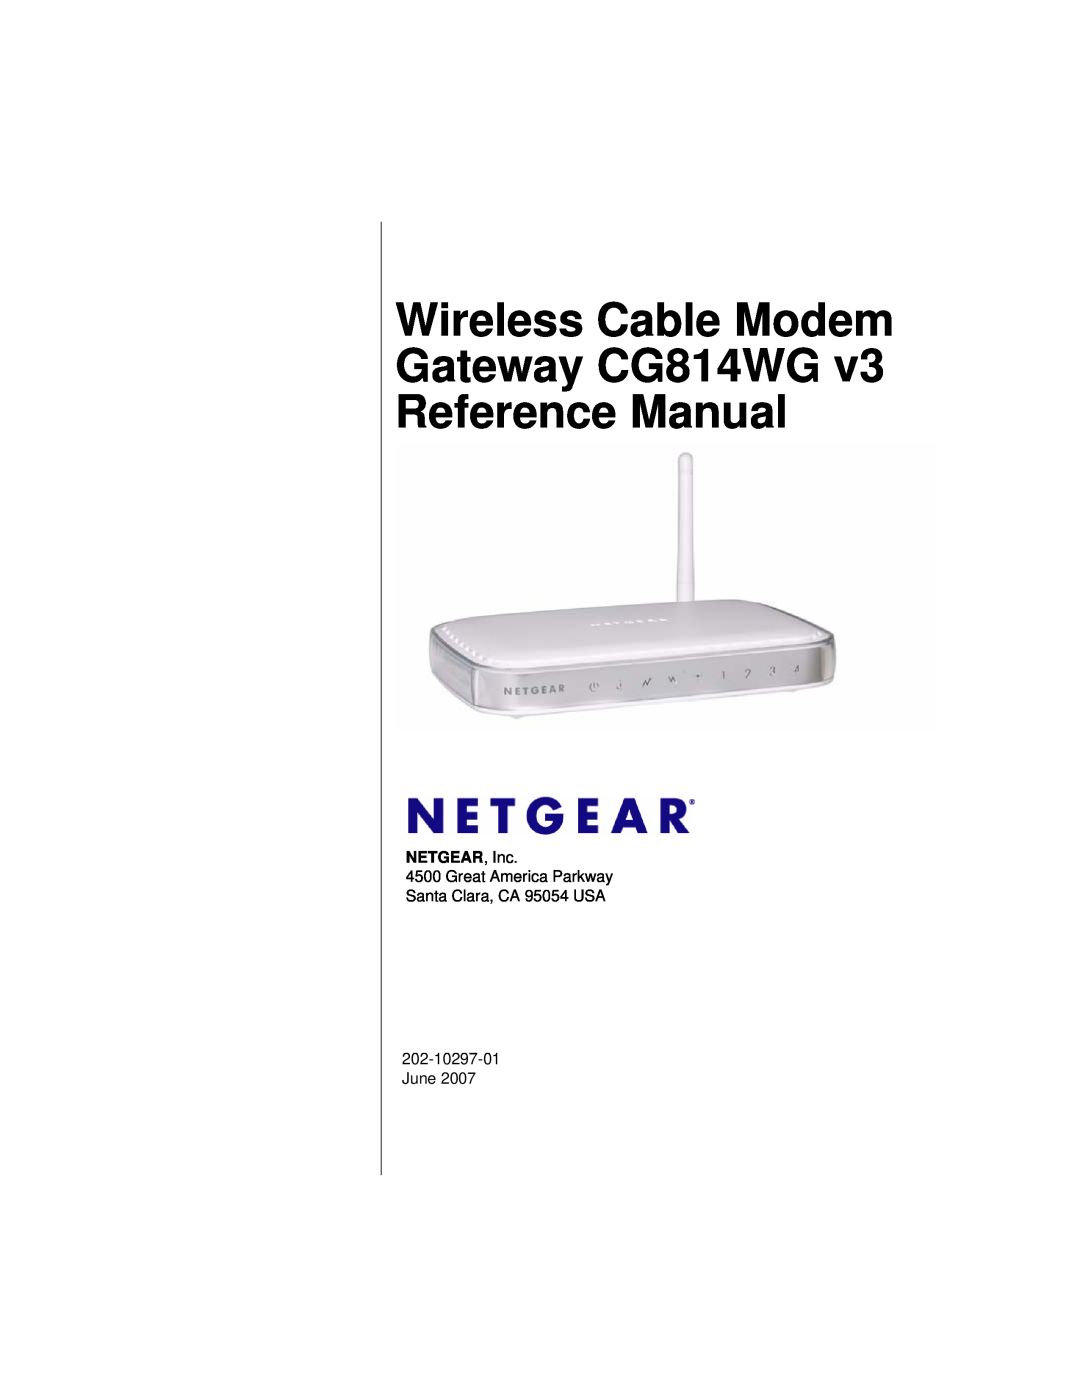 NETGEAR CG814WG V3 manual Wireless Cable Modem Gateway CG814WG Reference Manual, NETGEAR, Inc 